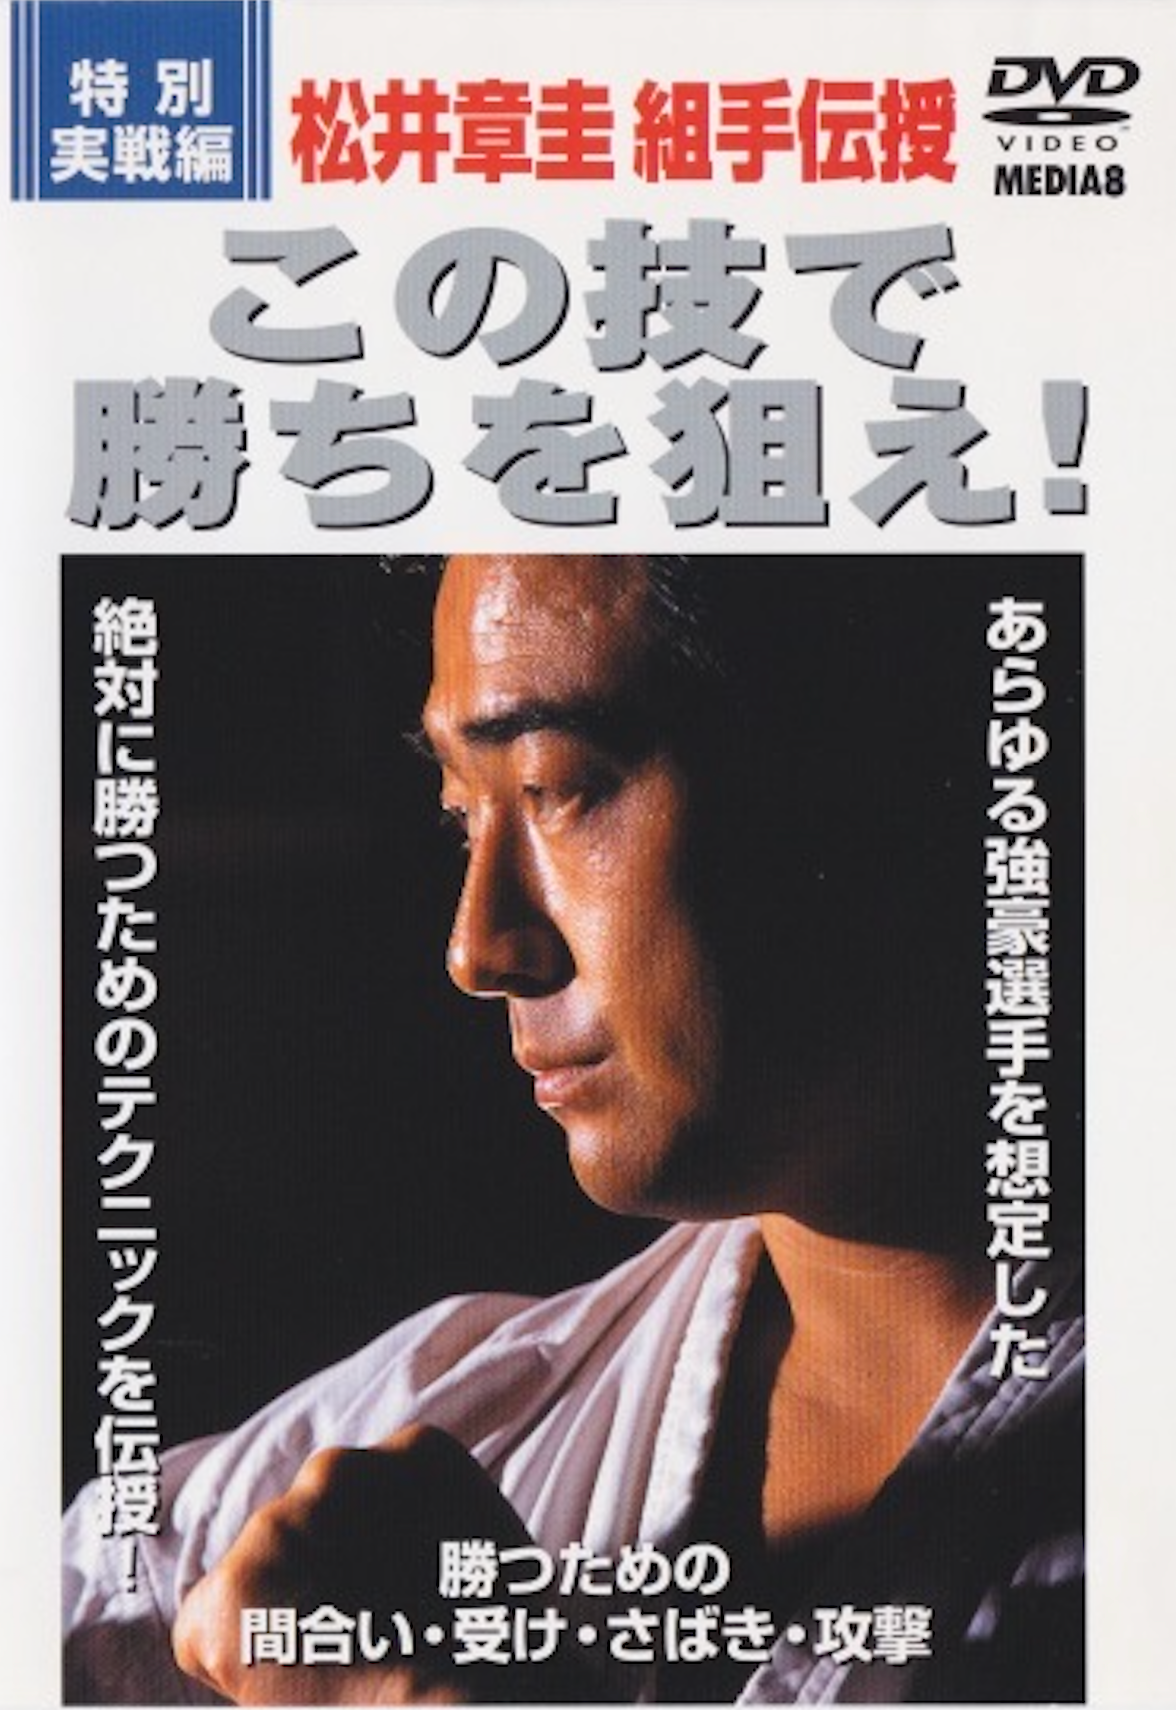 Aim For Victory Vol 1! Kyokushin Karate DVD by Shokei Matsui